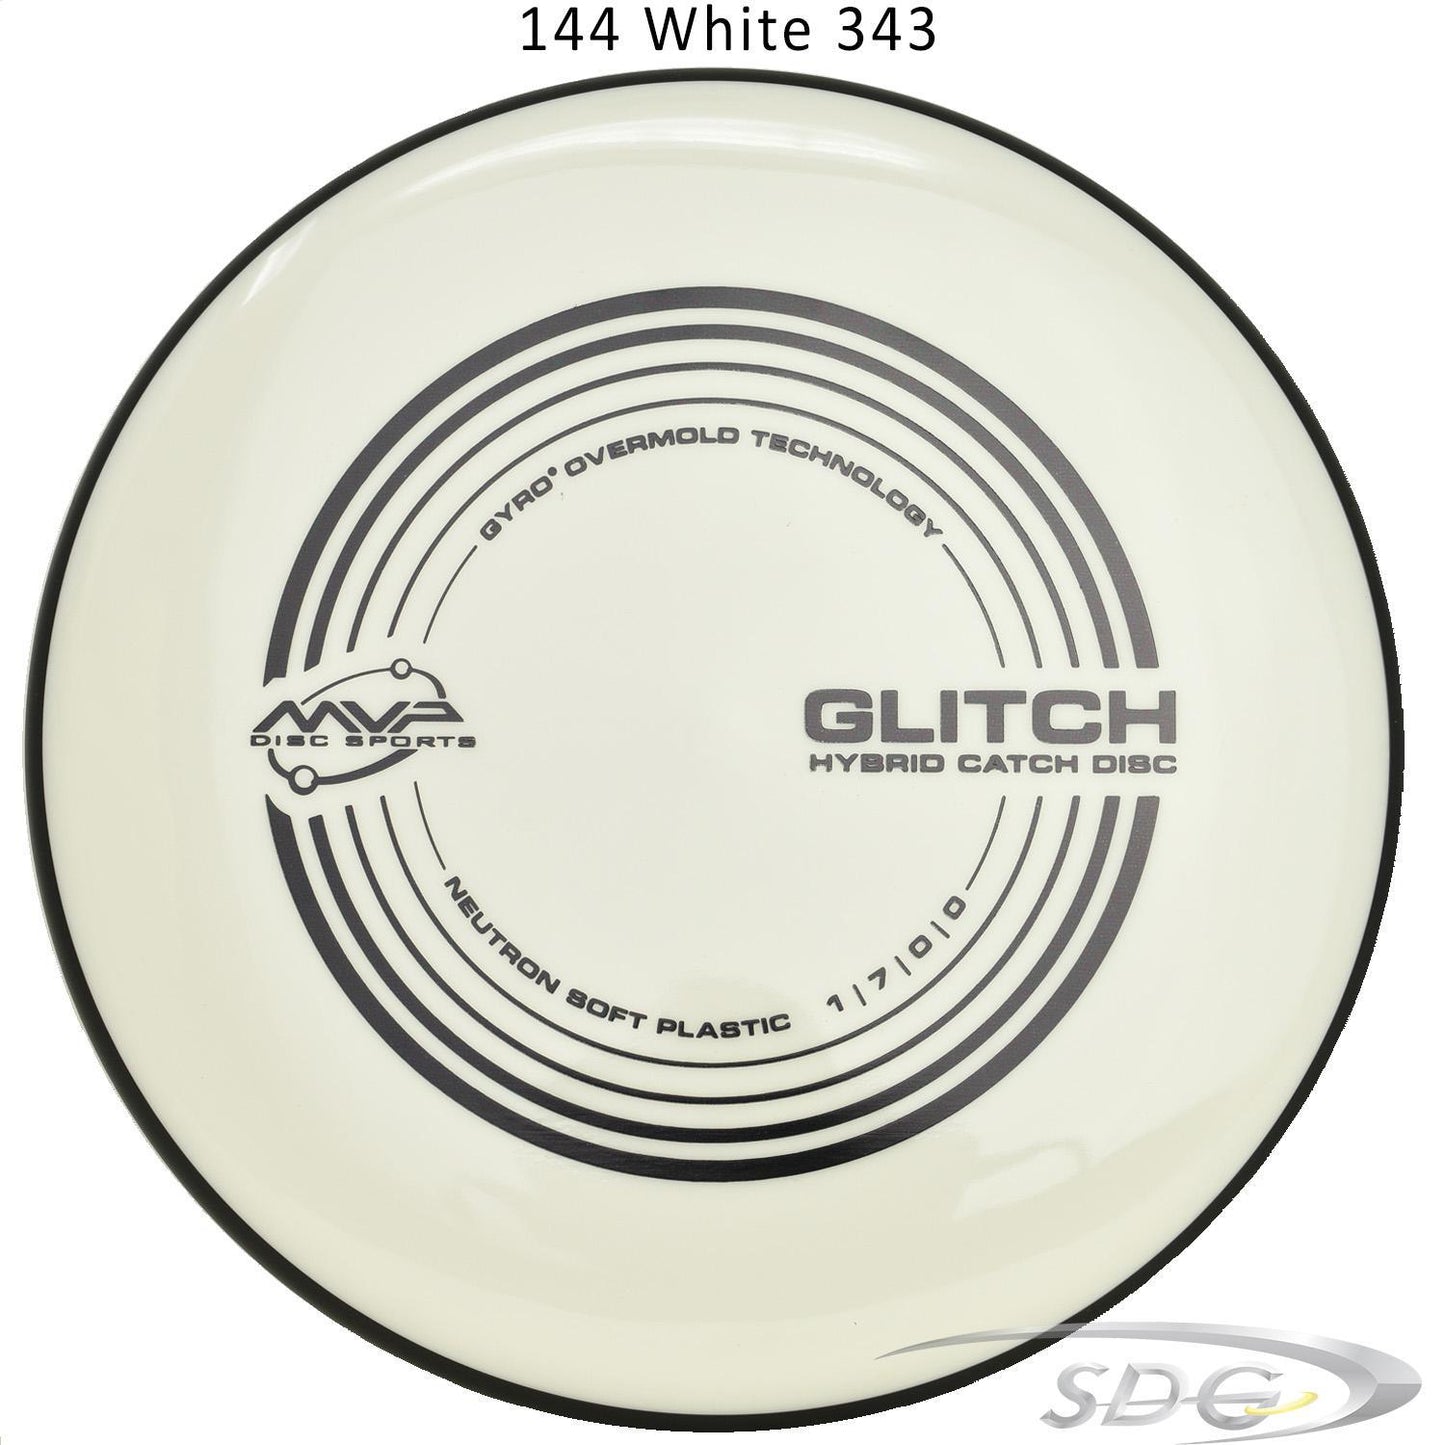 mvp-neutron-glitch-soft-hybrid-disc-golf-putt-approach 144 White 343 